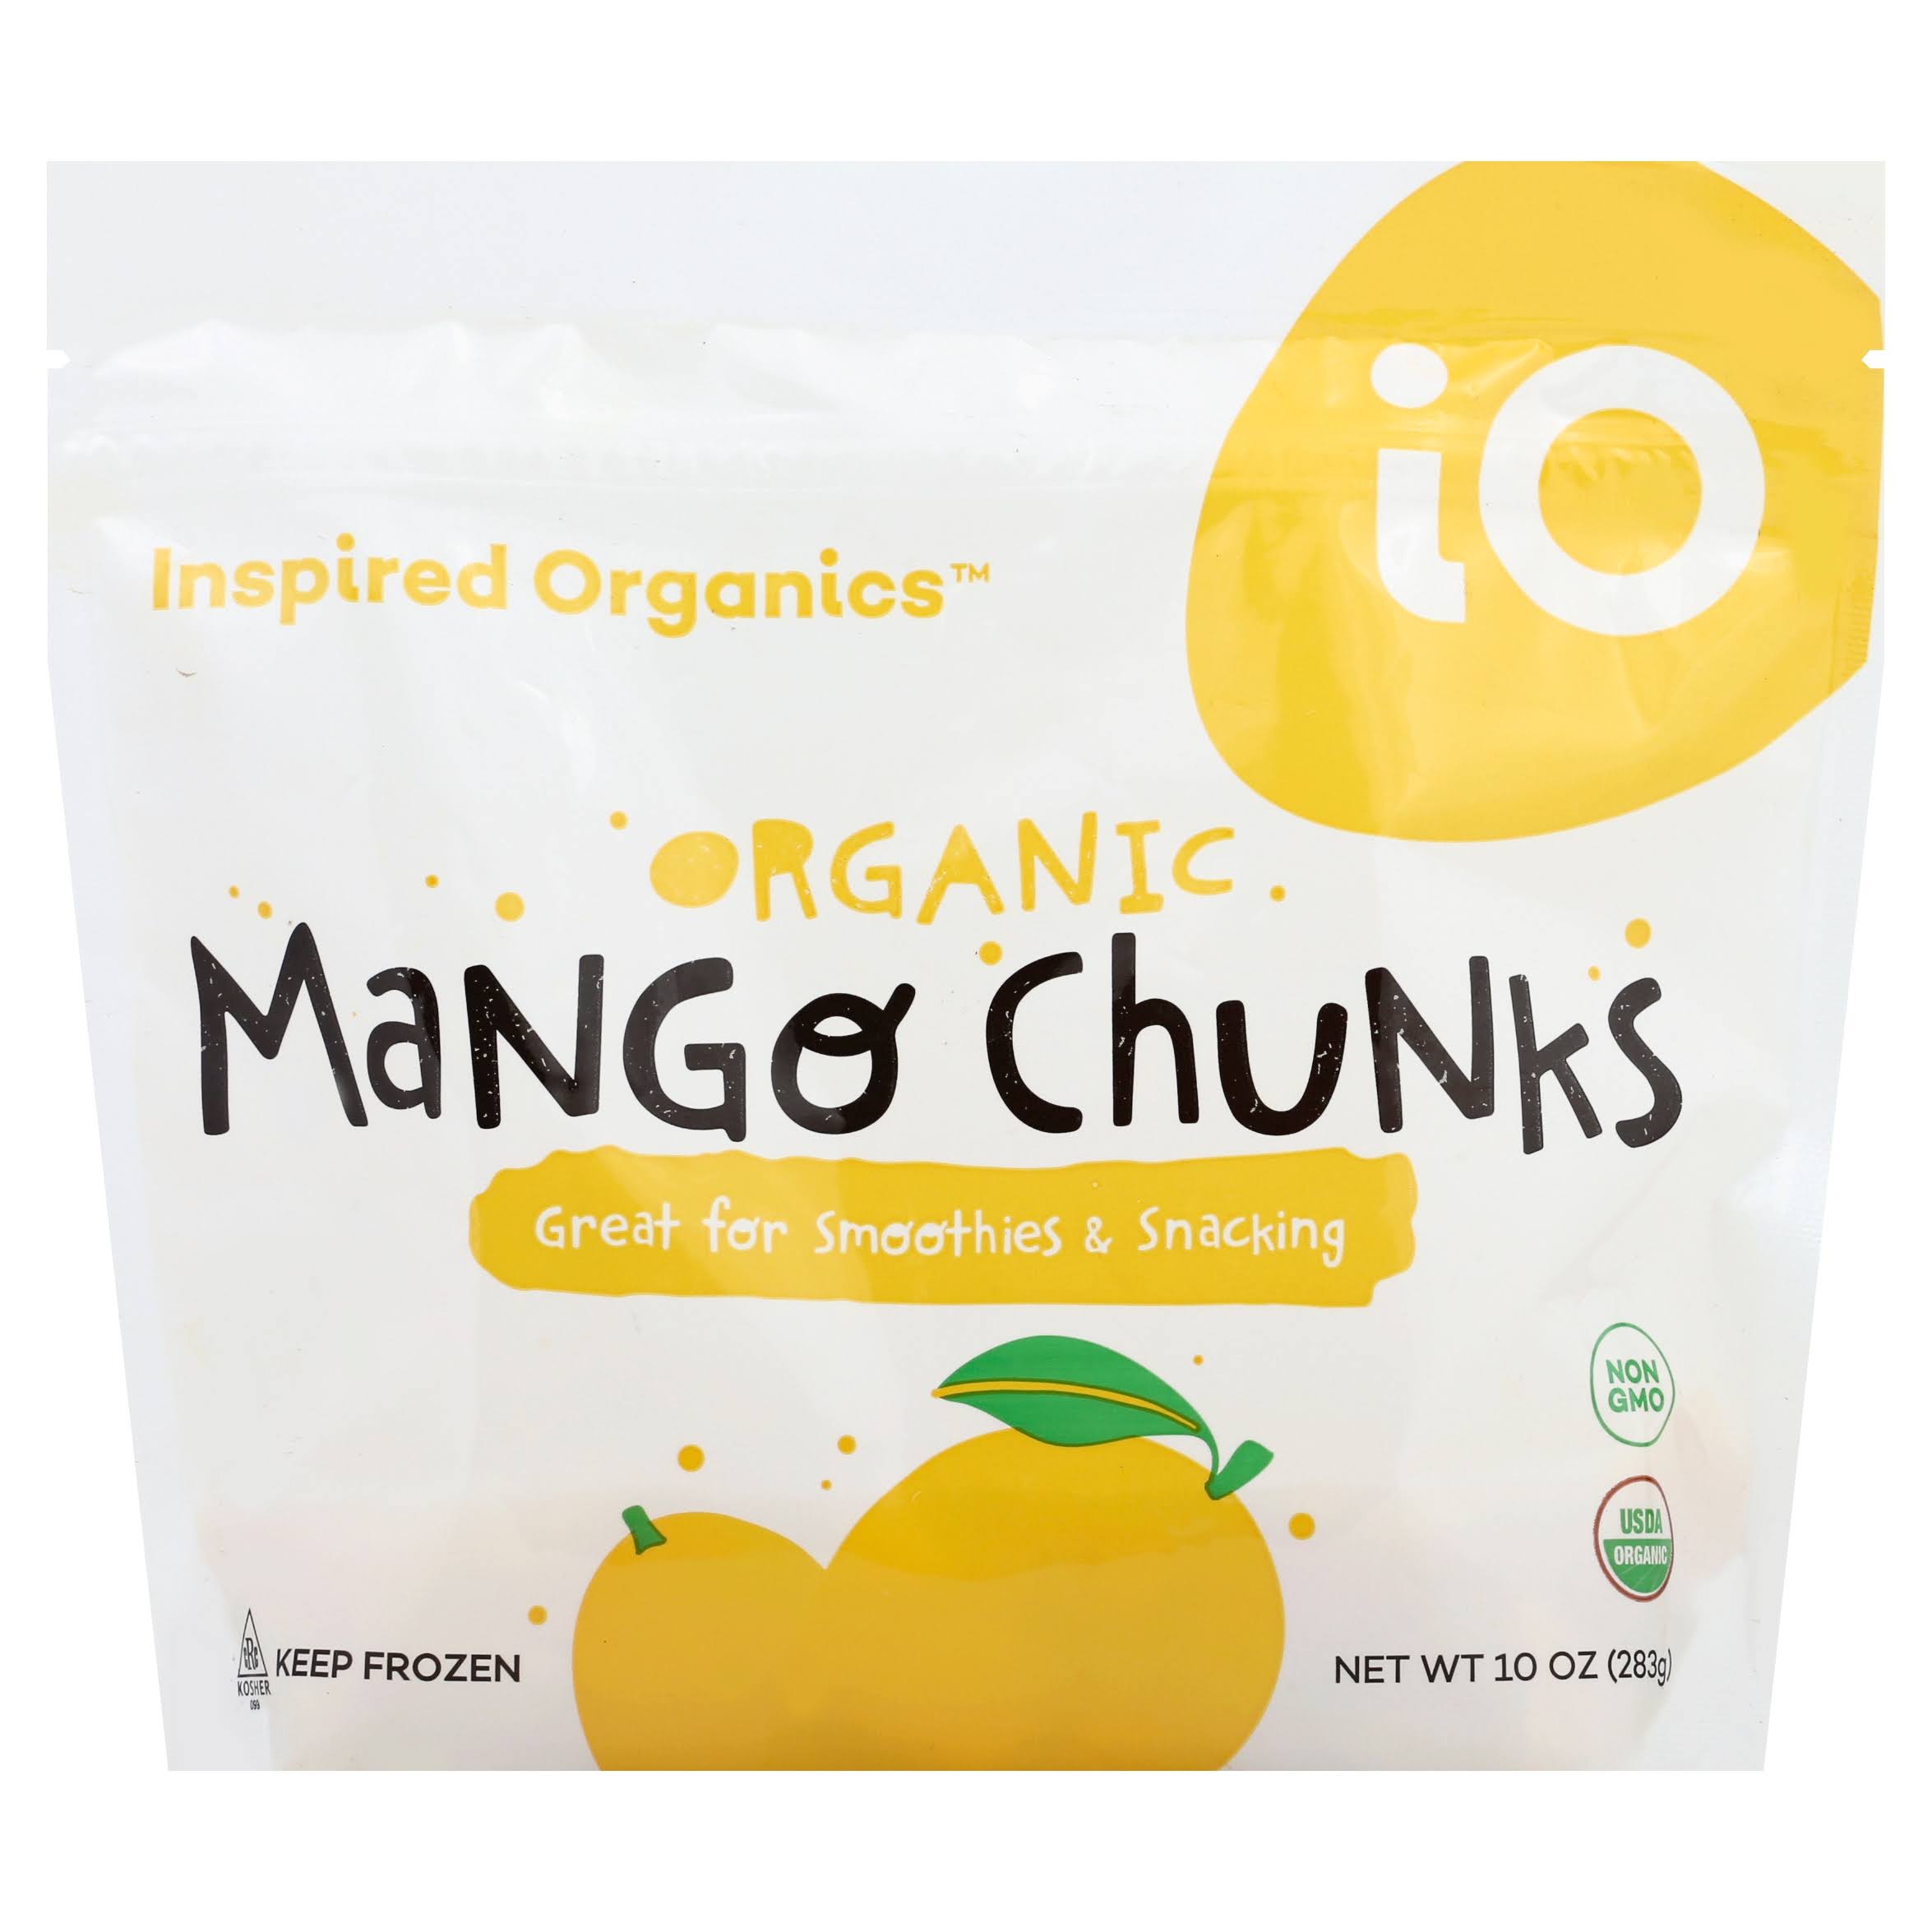 Inspired Organics Mango Chunks, Organic - 10 oz